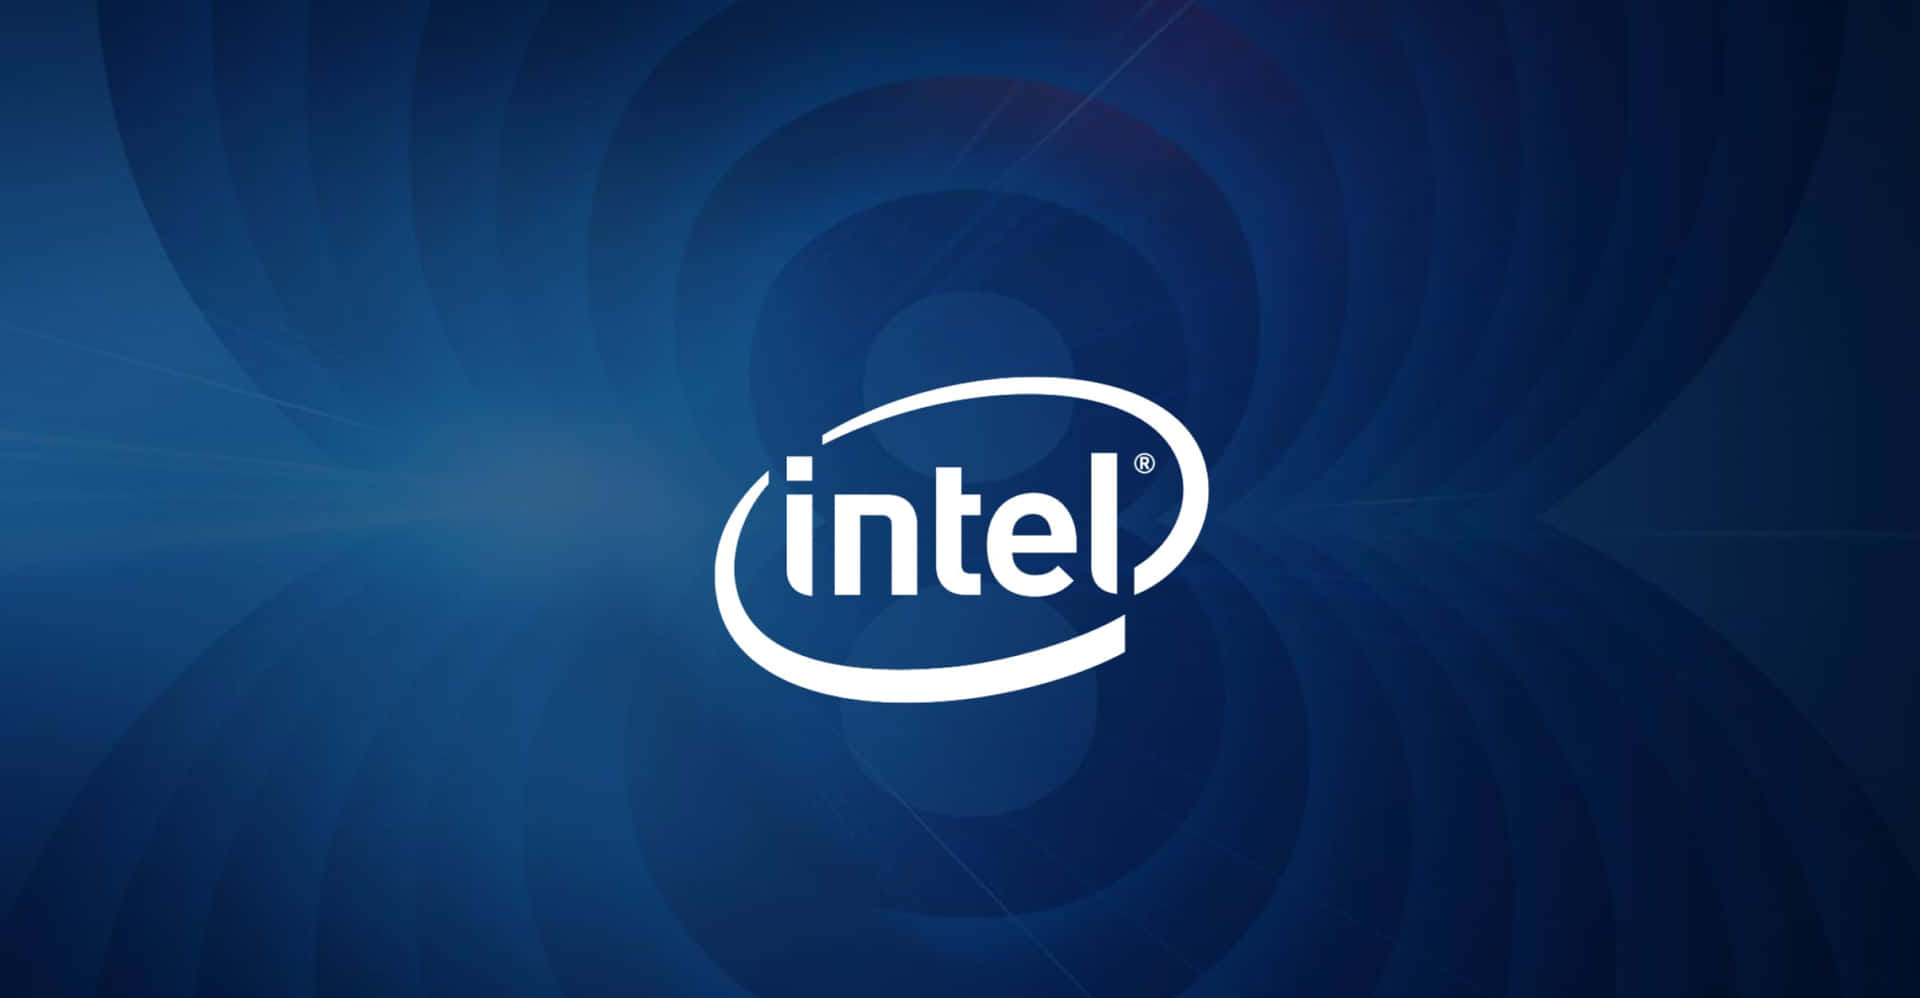 Intel Logo Blue Background Wallpaper